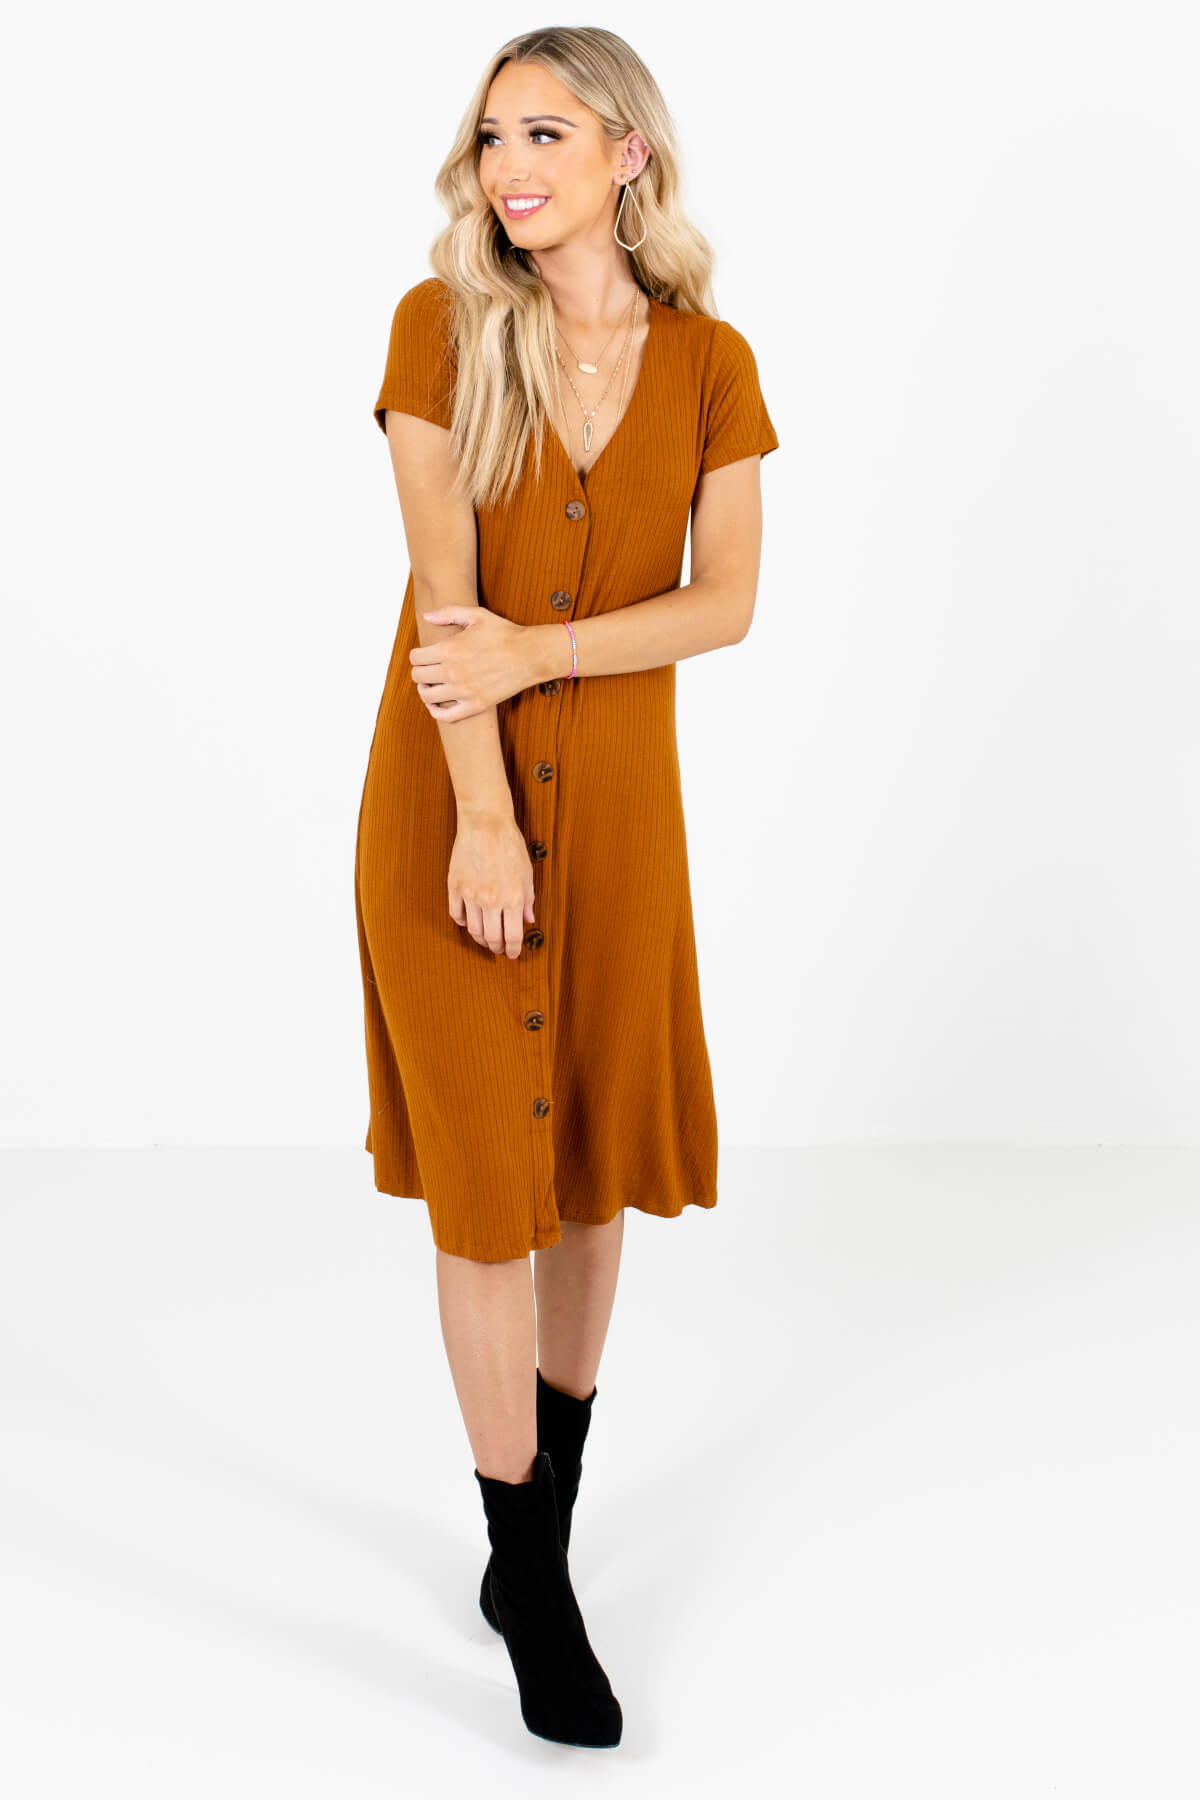 Rust Orange Cute and Comfortable Boutique Midi Dresses for Women